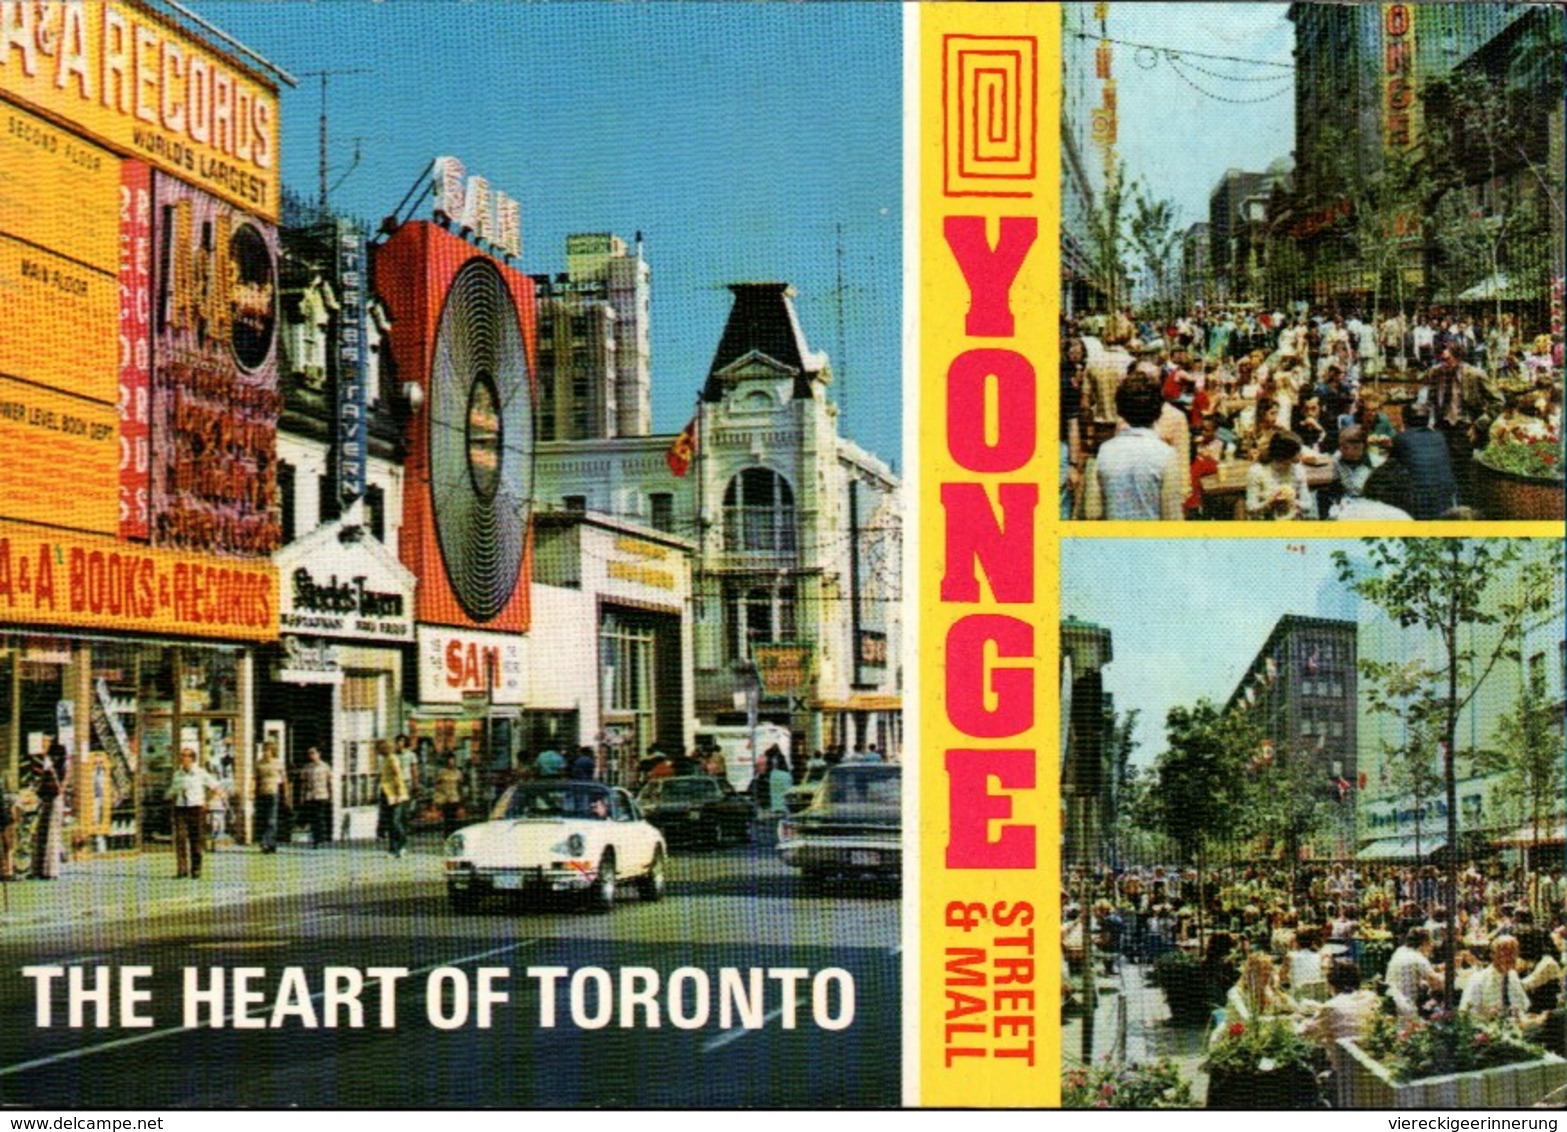 ! Ansichtskarte Aus Toronto, Yonge Street, Autos, Cars, Automobiles, KFZ, PKW, Porsche, Plattenladen, Records Shop - Toronto